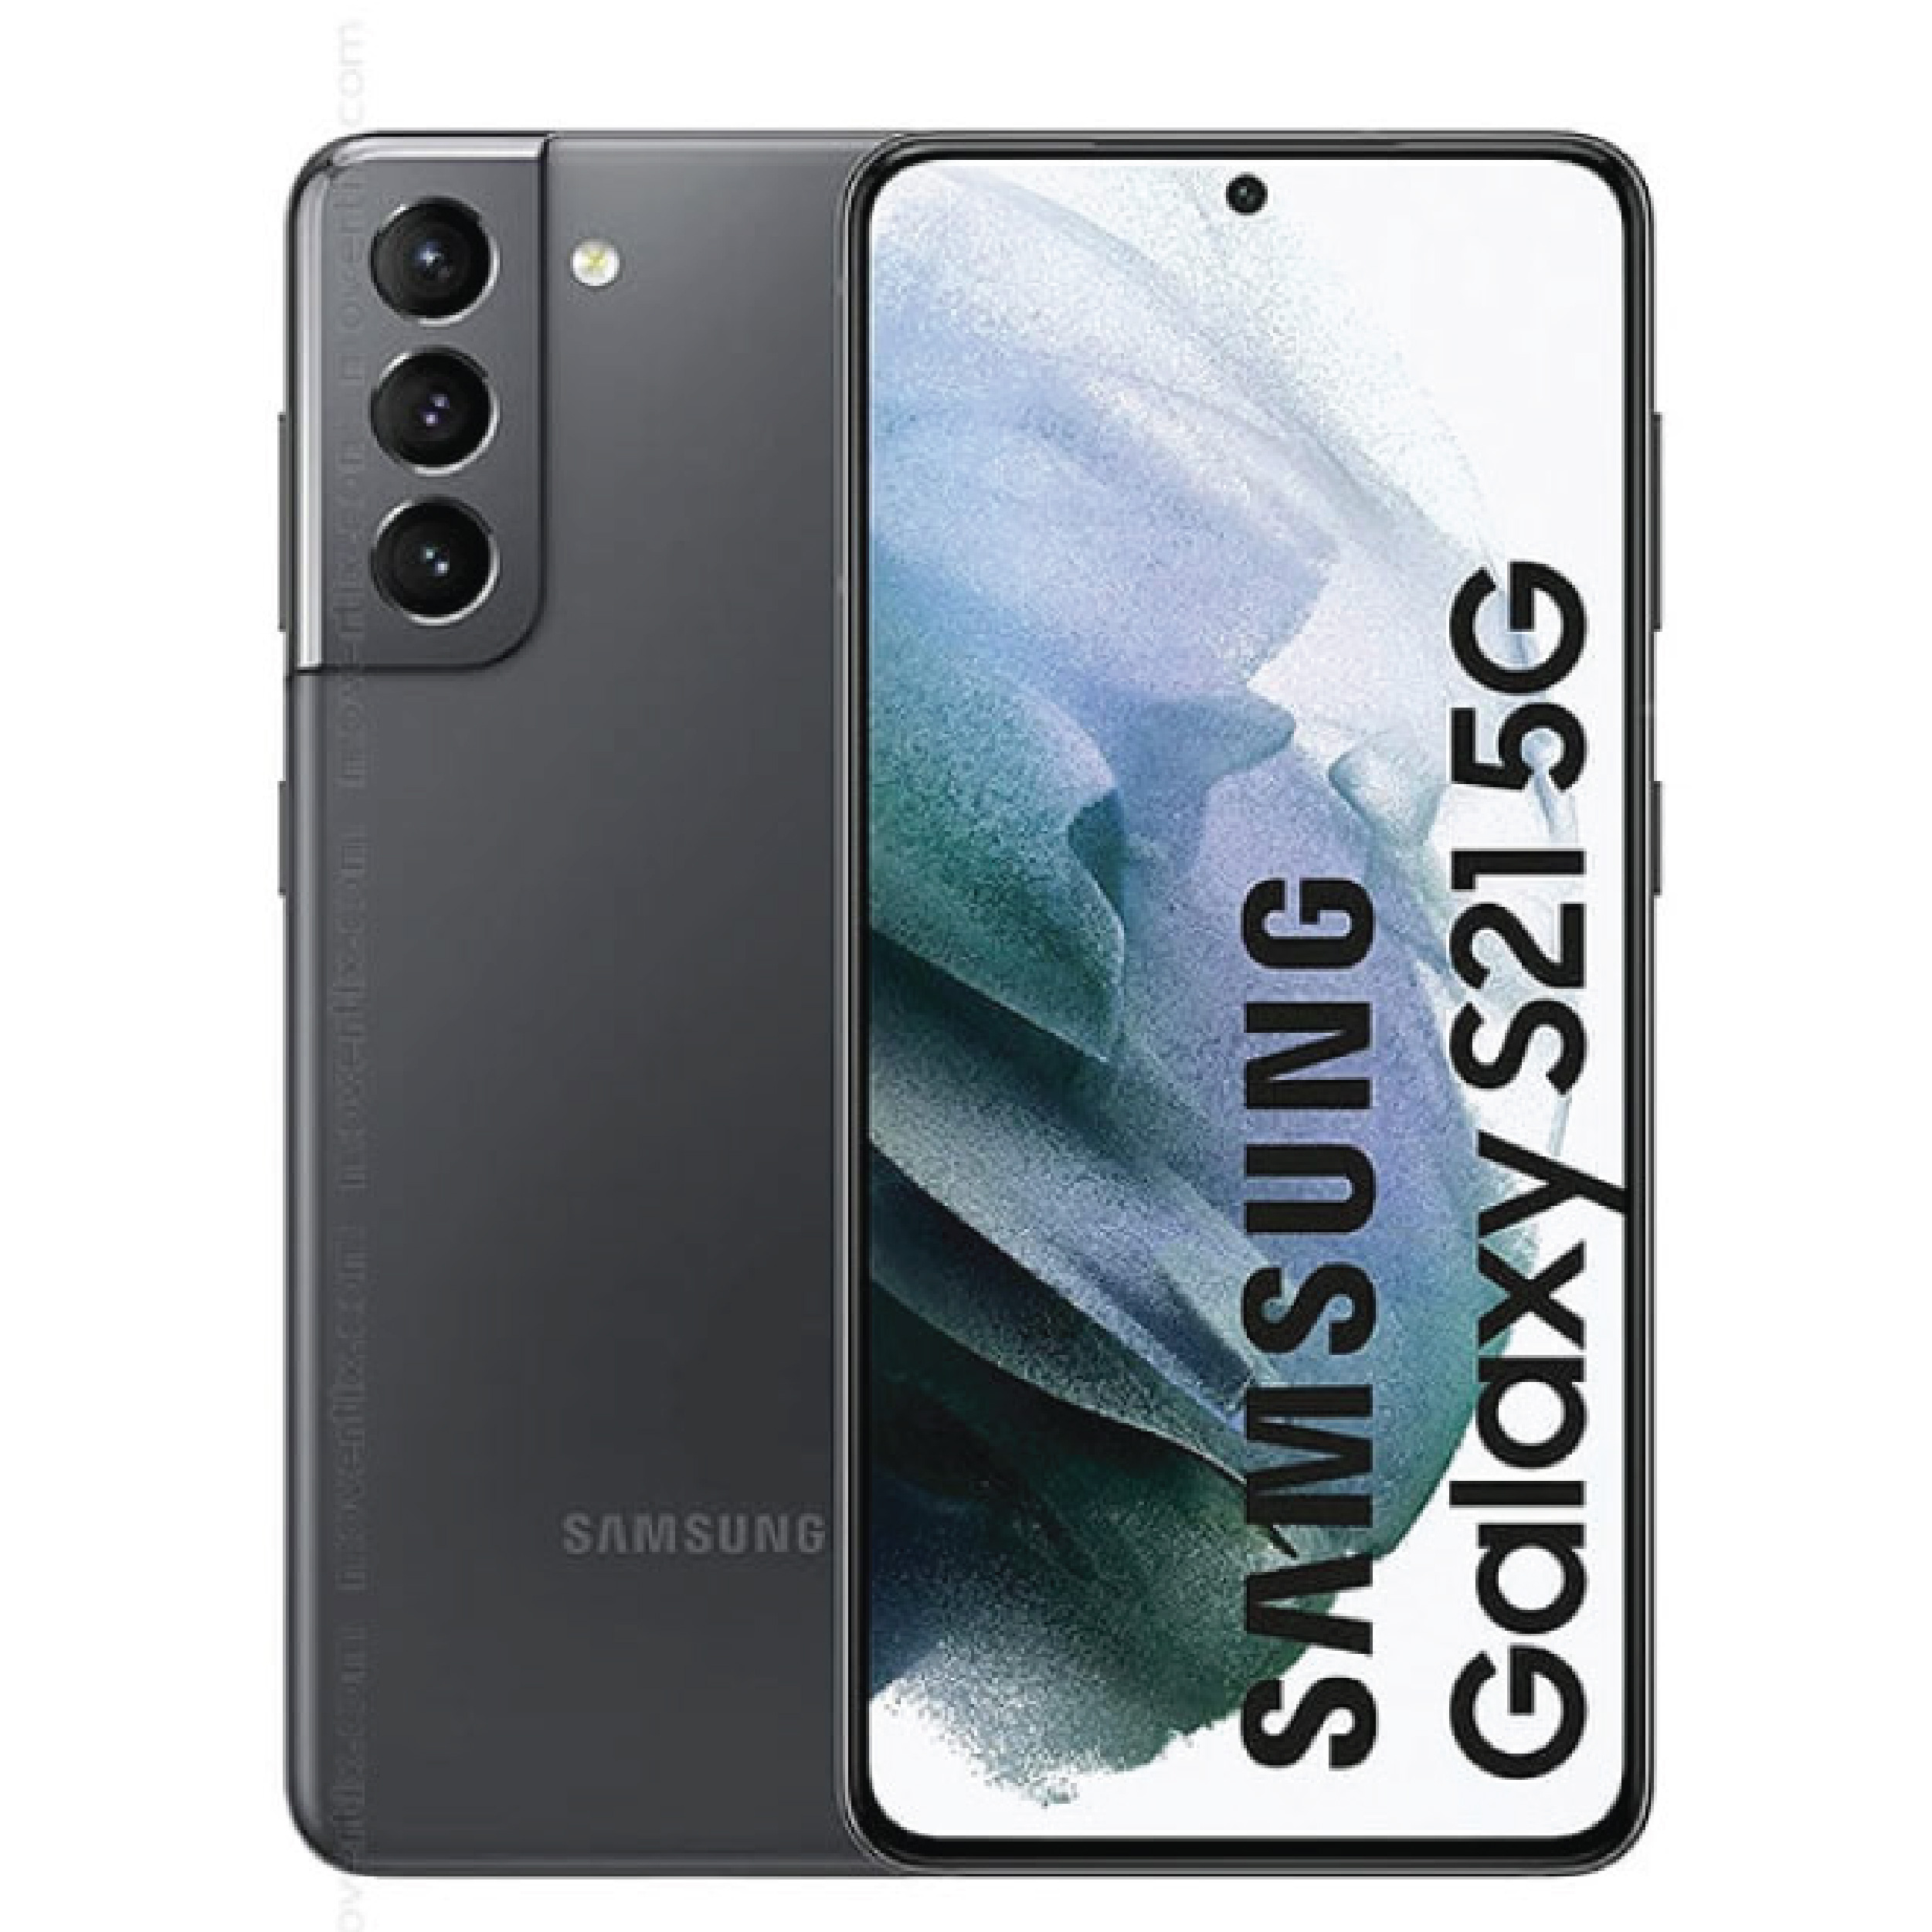 Samsung Galaxy S21 5G Price in Kenya - Price at Zuricart